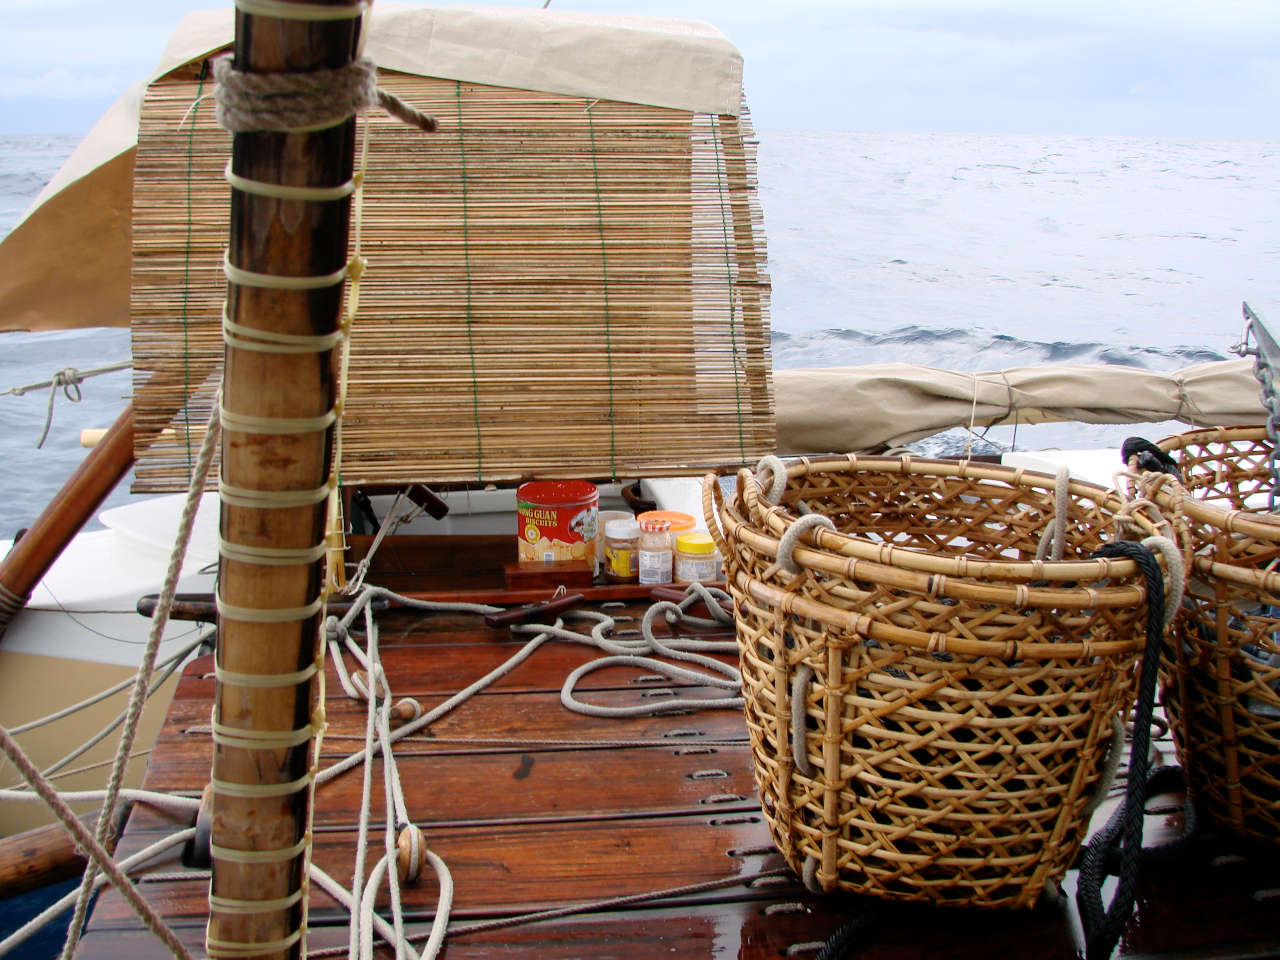 Washing baskets on deck